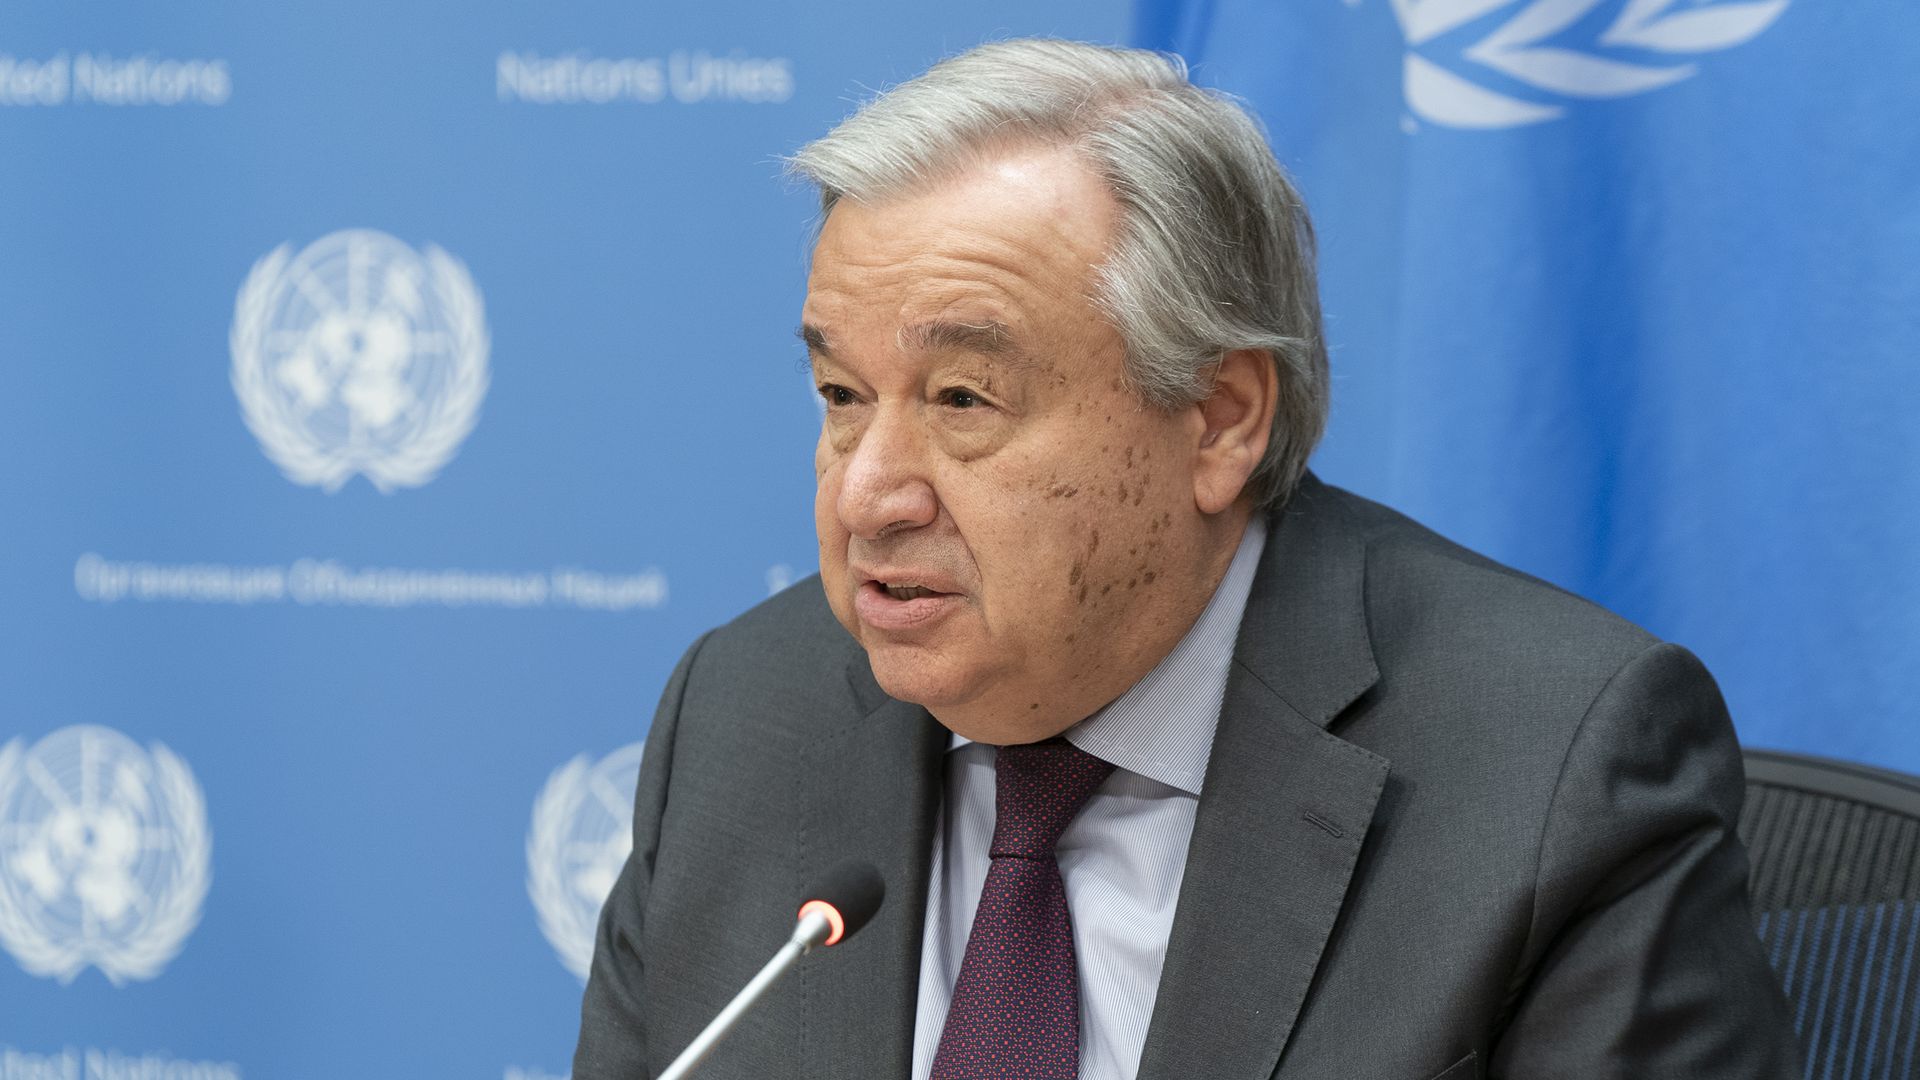 UN SG Antonio Guterres briefs press on climate change at UN Headquarters